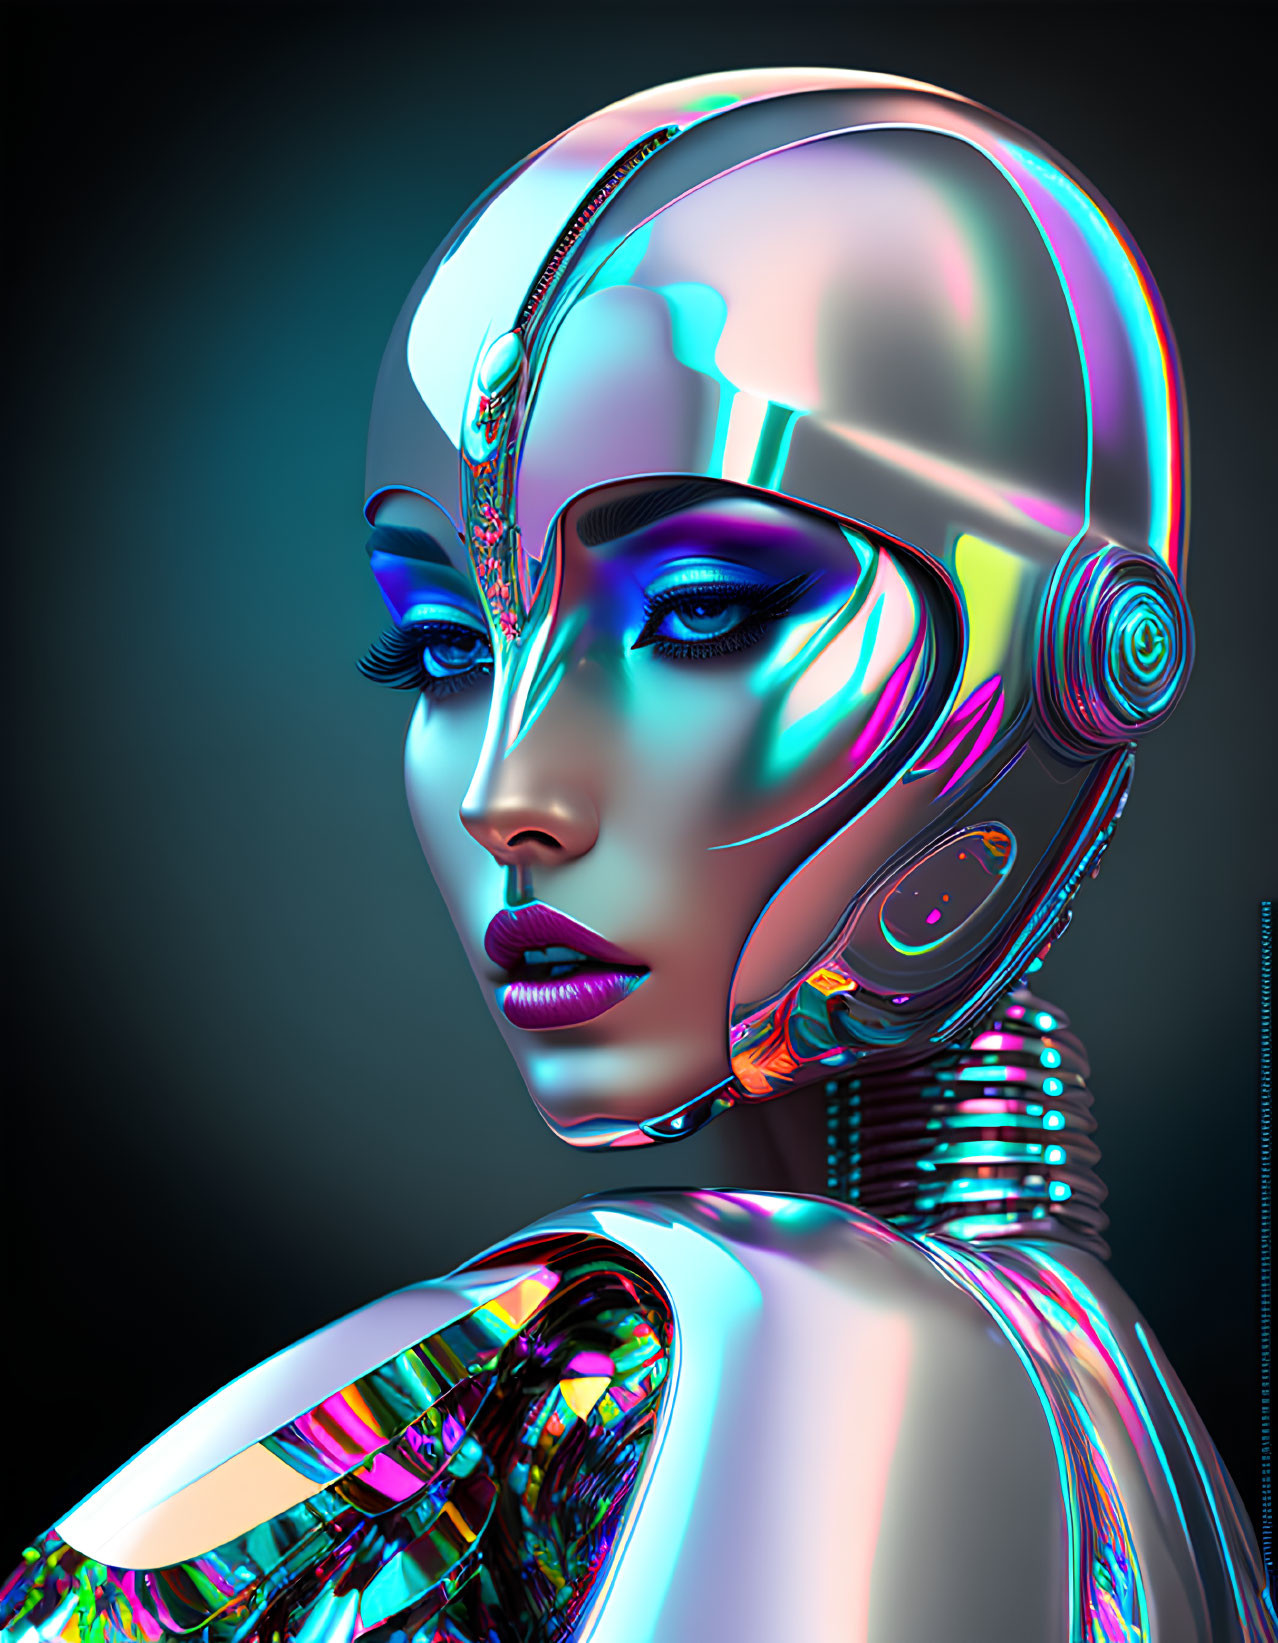 Colorful Female Robot Artwork on Dark Background